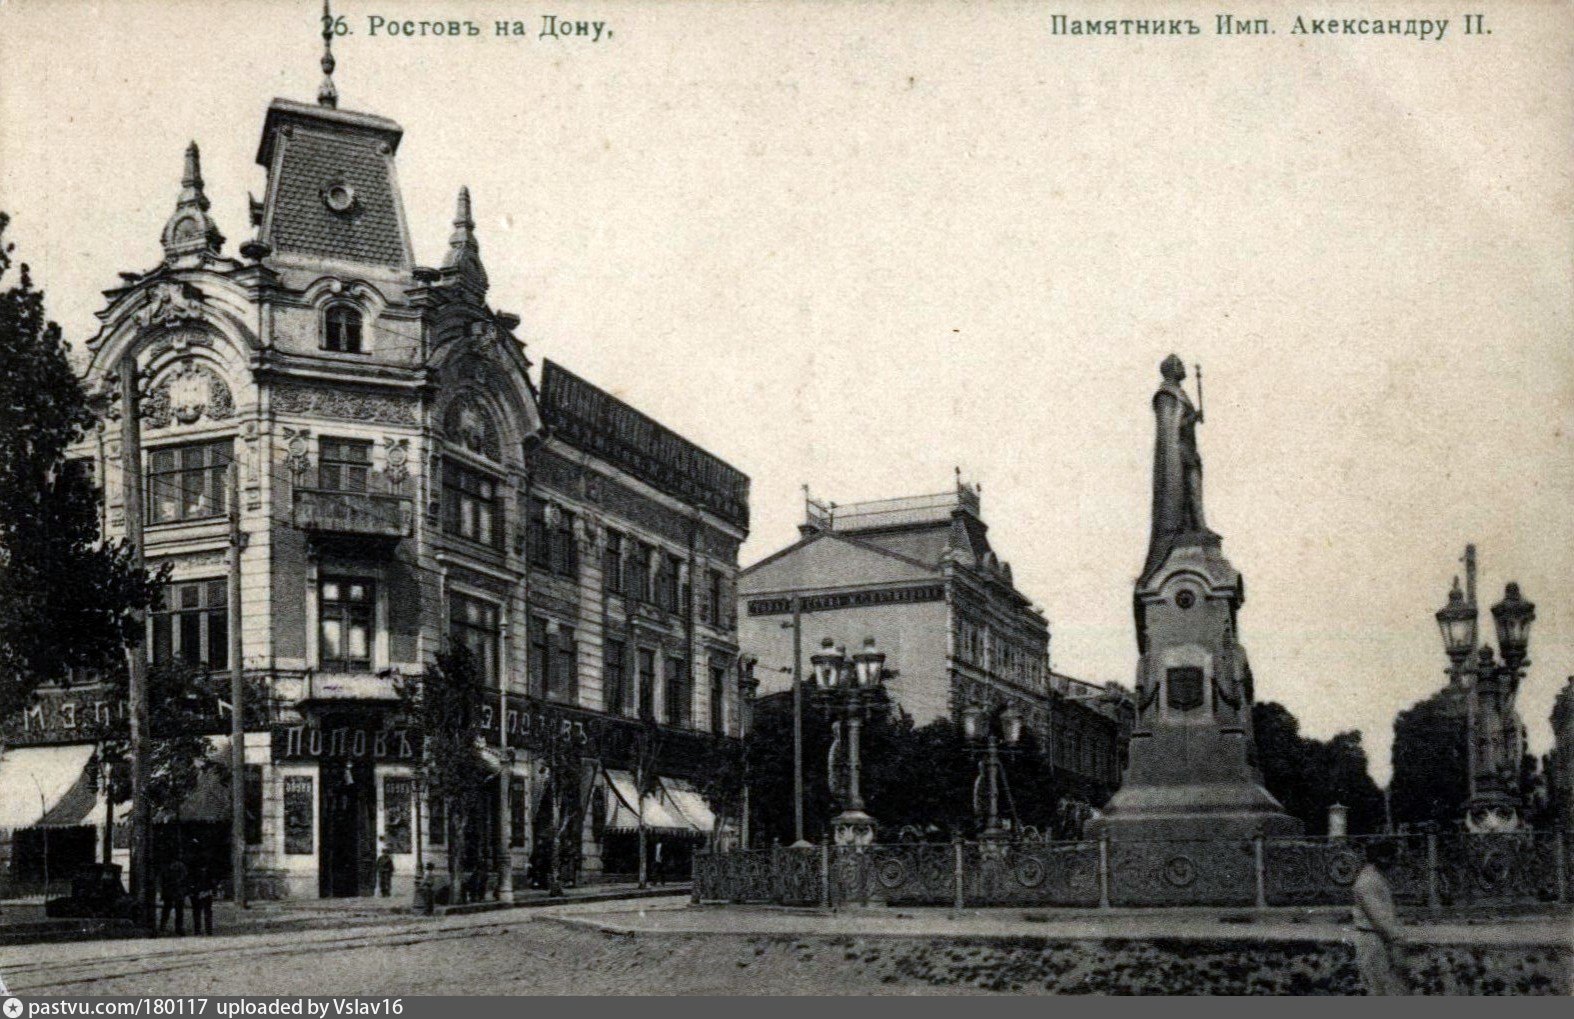 Памятник Александру II В Ростове-на-Дону (1890)